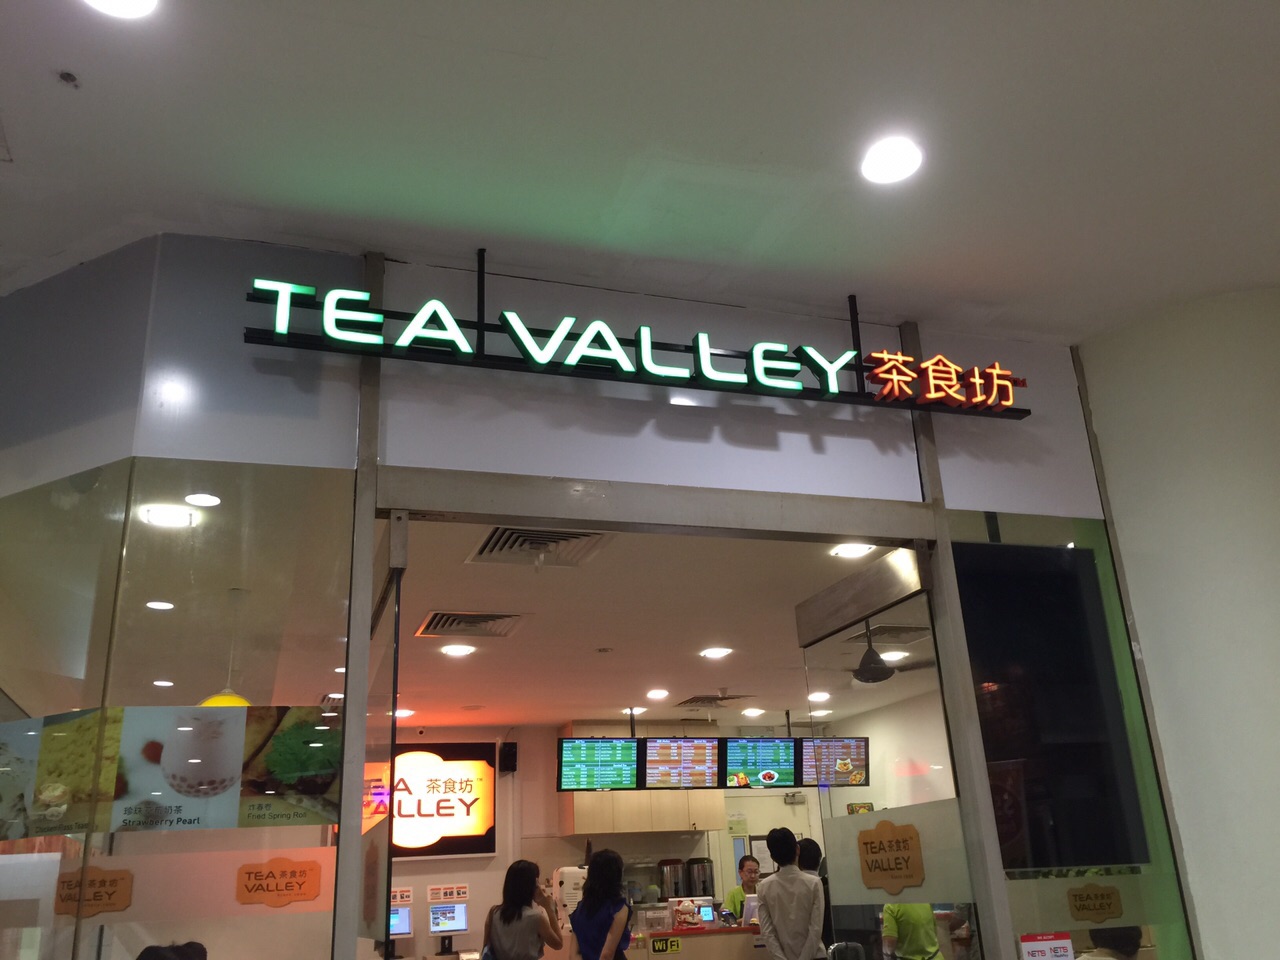 Tea Valley